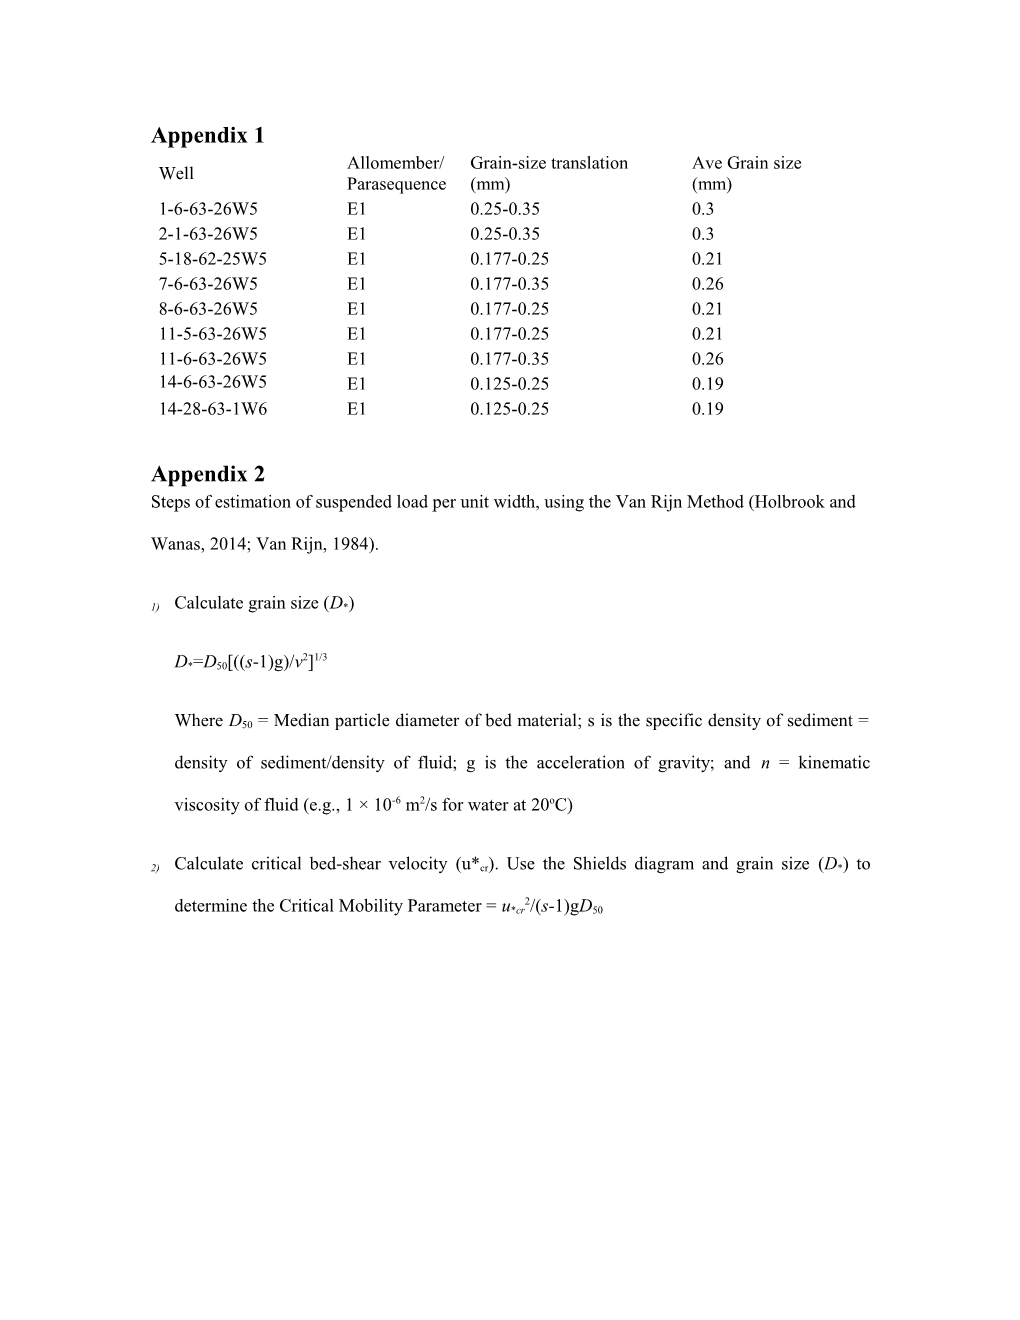 Steps of Estimation of Suspended Load Per Unit Width, Using the Van Rijn Method (Holbrook